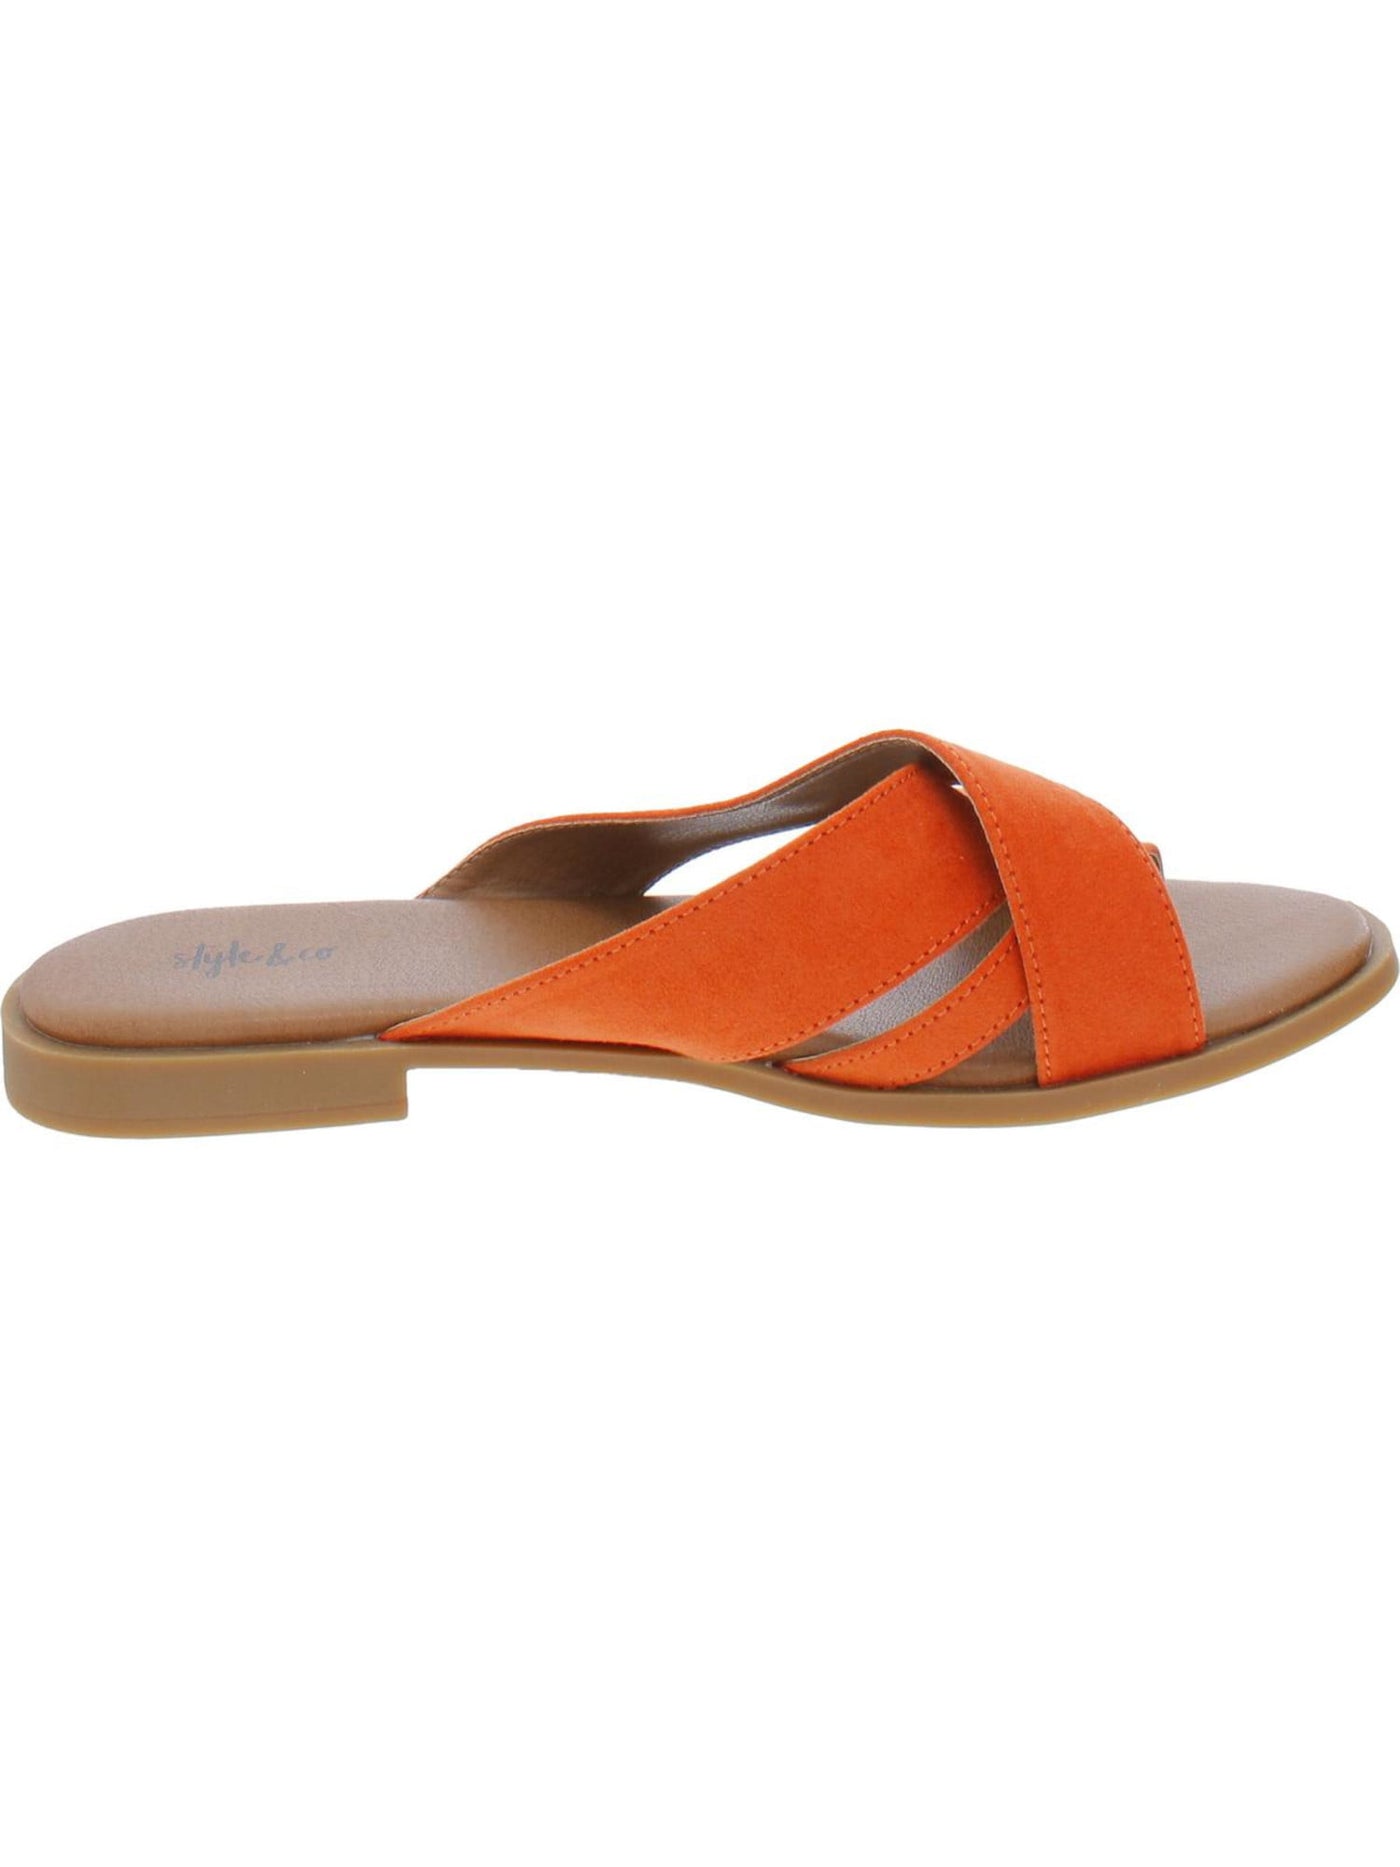 STYLE & COMPANY Womens Orange Cushioned Carolyn Round Toe Slip On Sandals Shoes 7.5 M